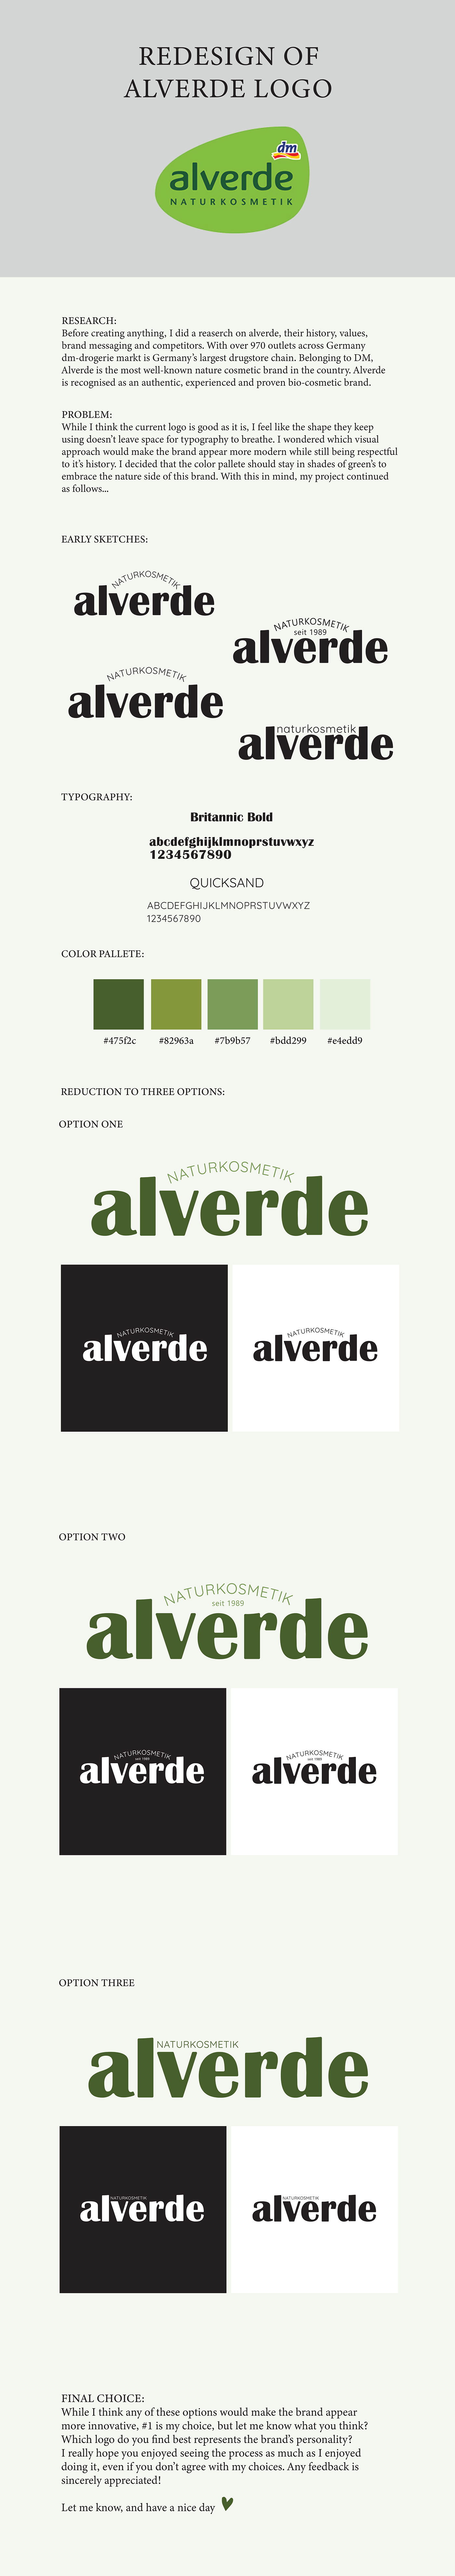 alverde brand logo Logo redesign Natural Cosmetics redesign typography  